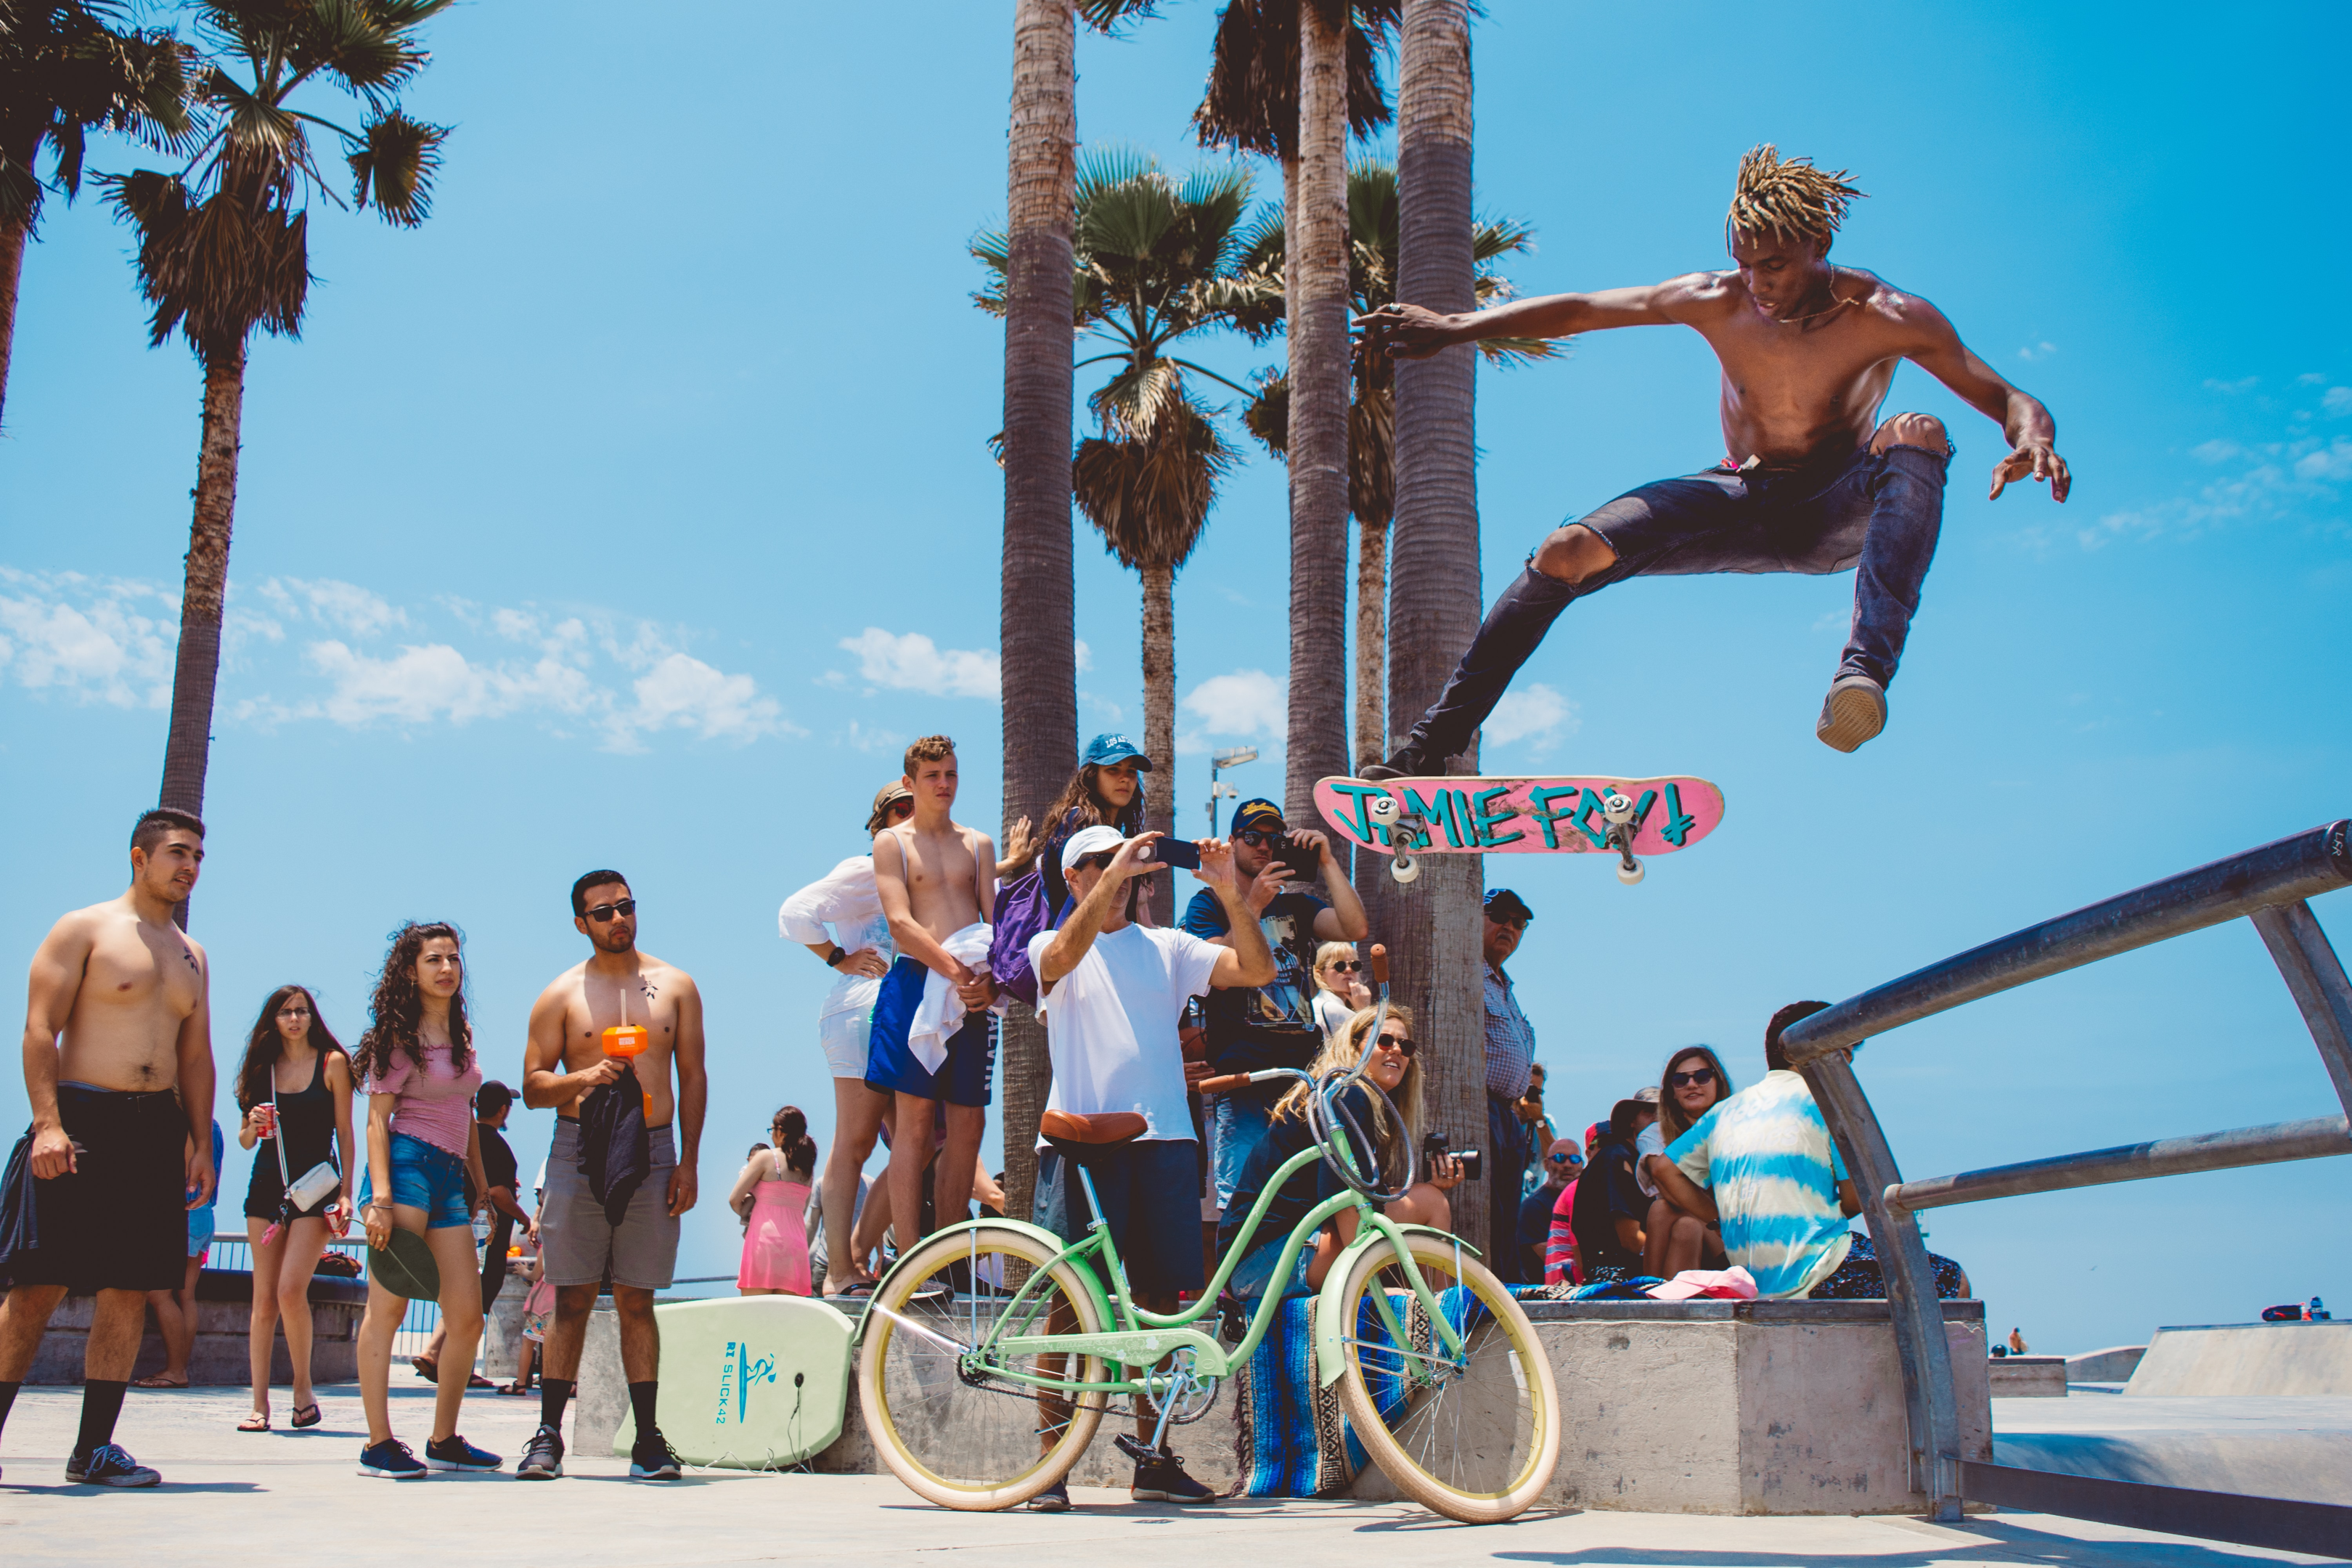 People at the Venice Beach Skate Park